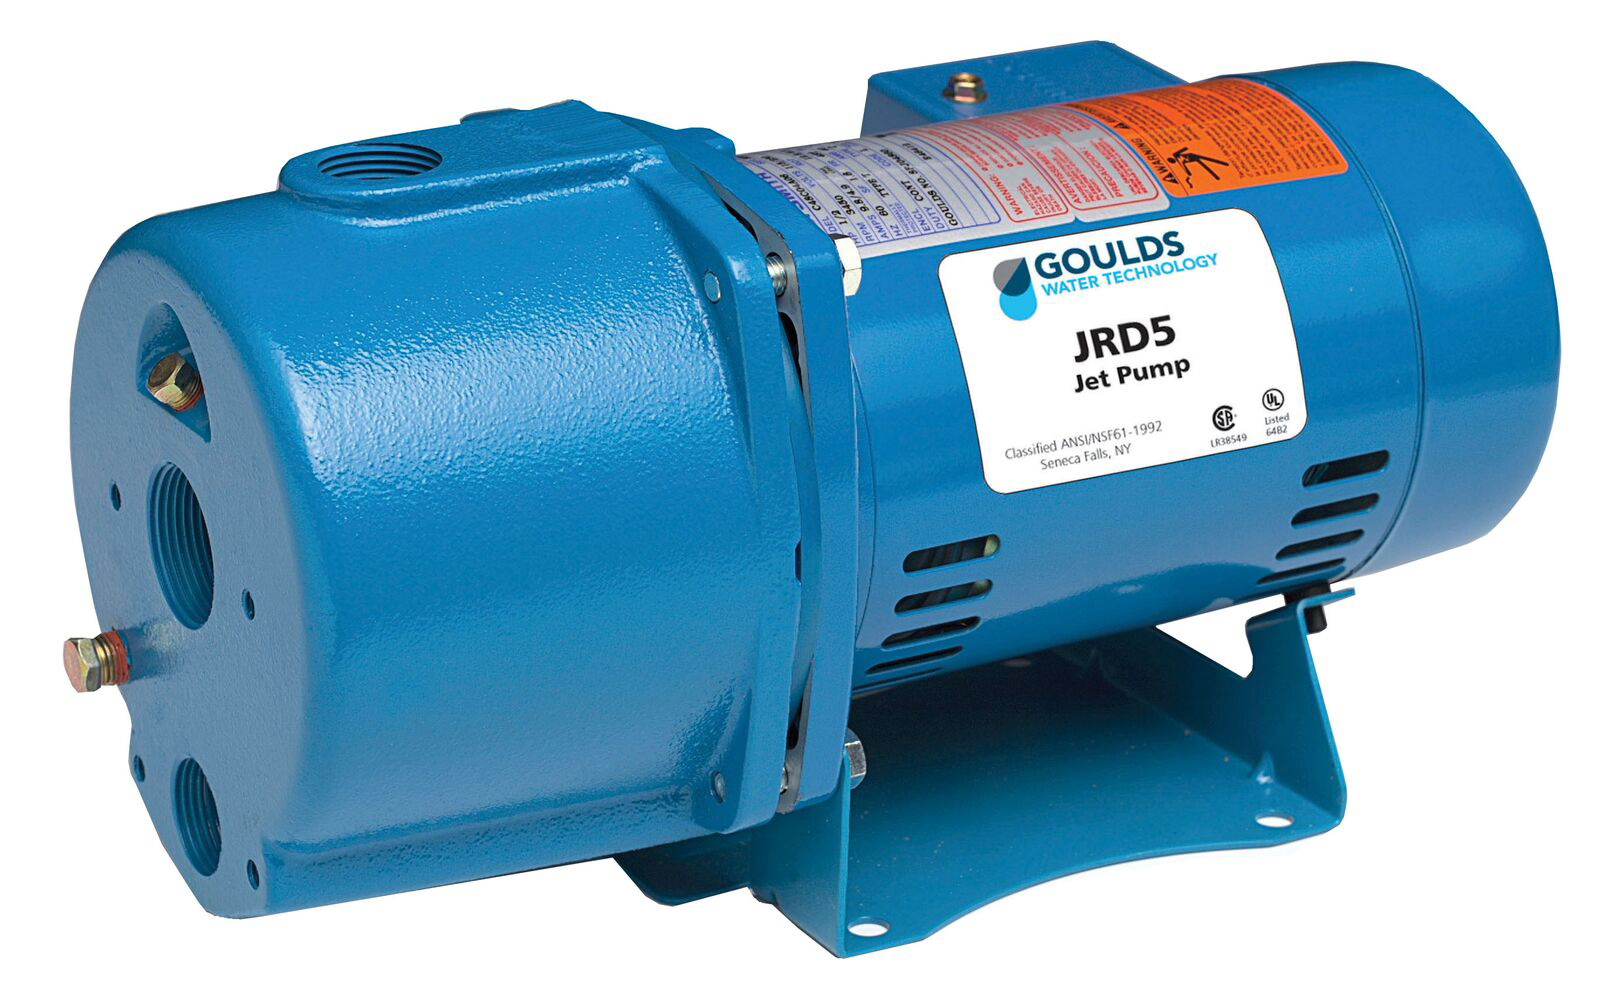 Goulds J5 1/2 HP Convertible Water Well Jet Pump 115/230V 1PH